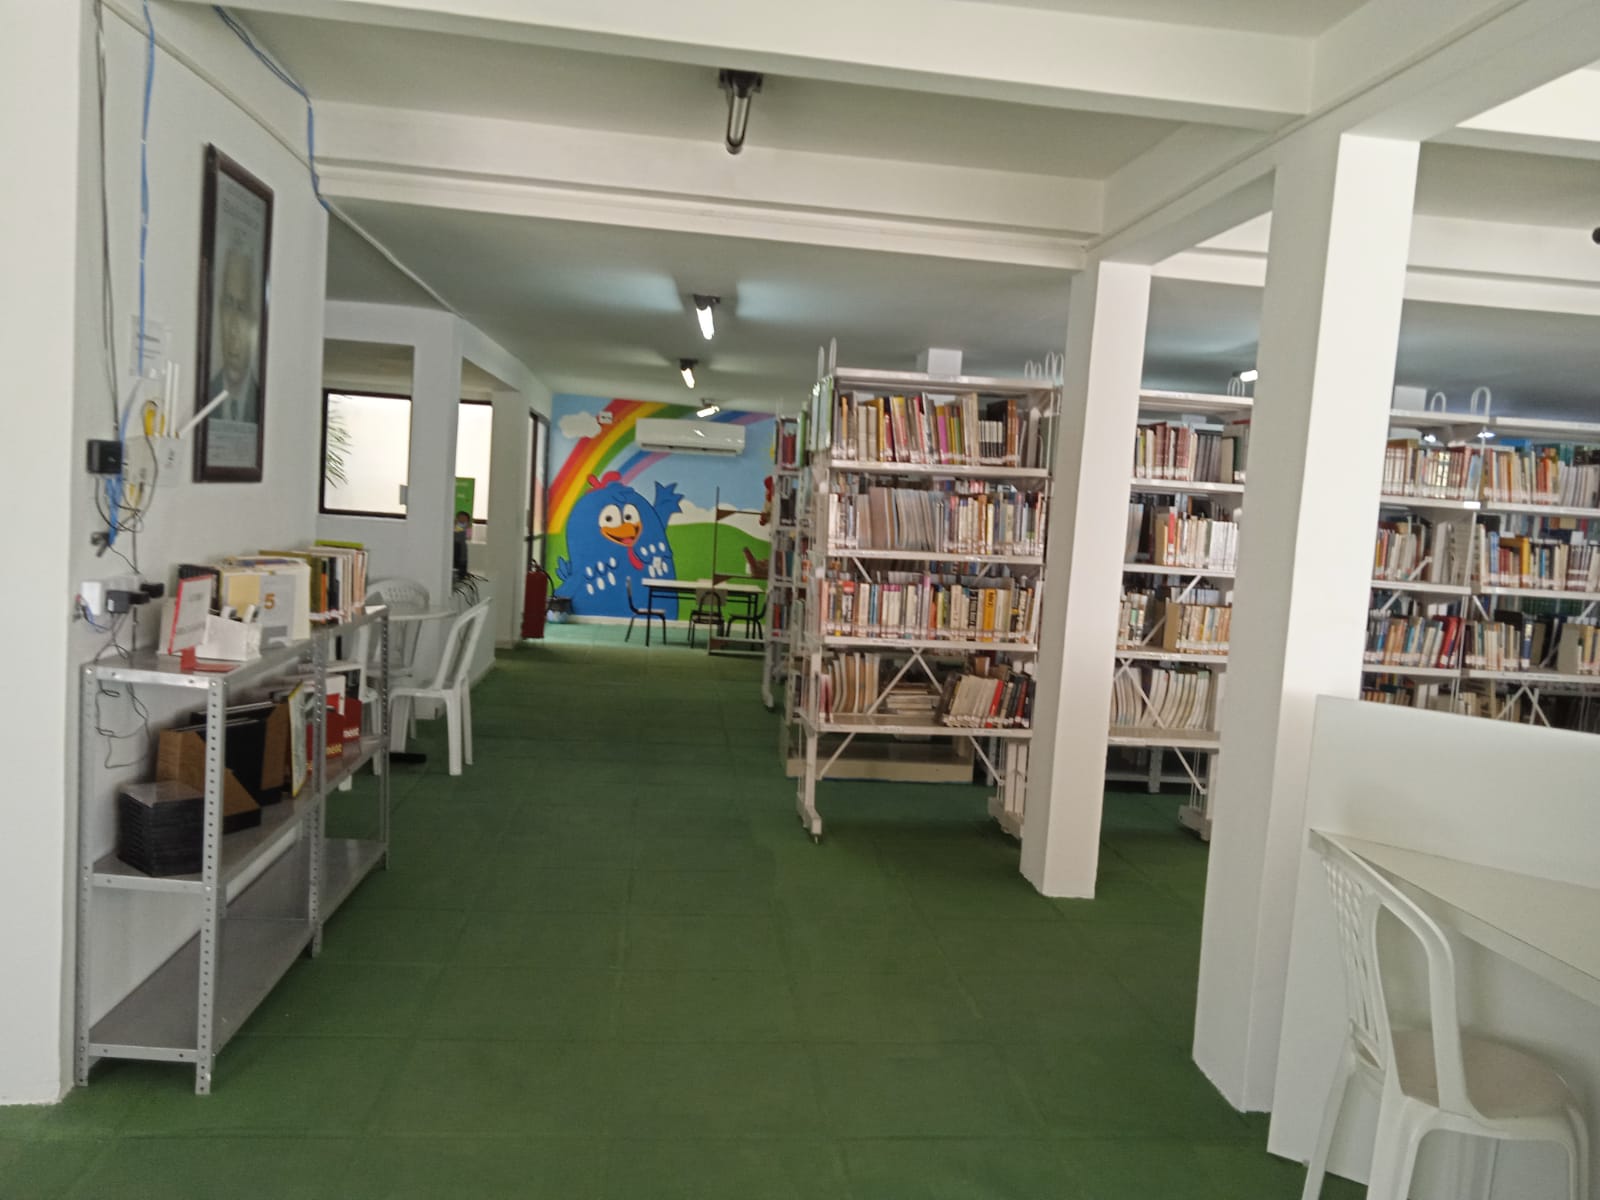 Biblioteca de ST abre às portas após reforma completa